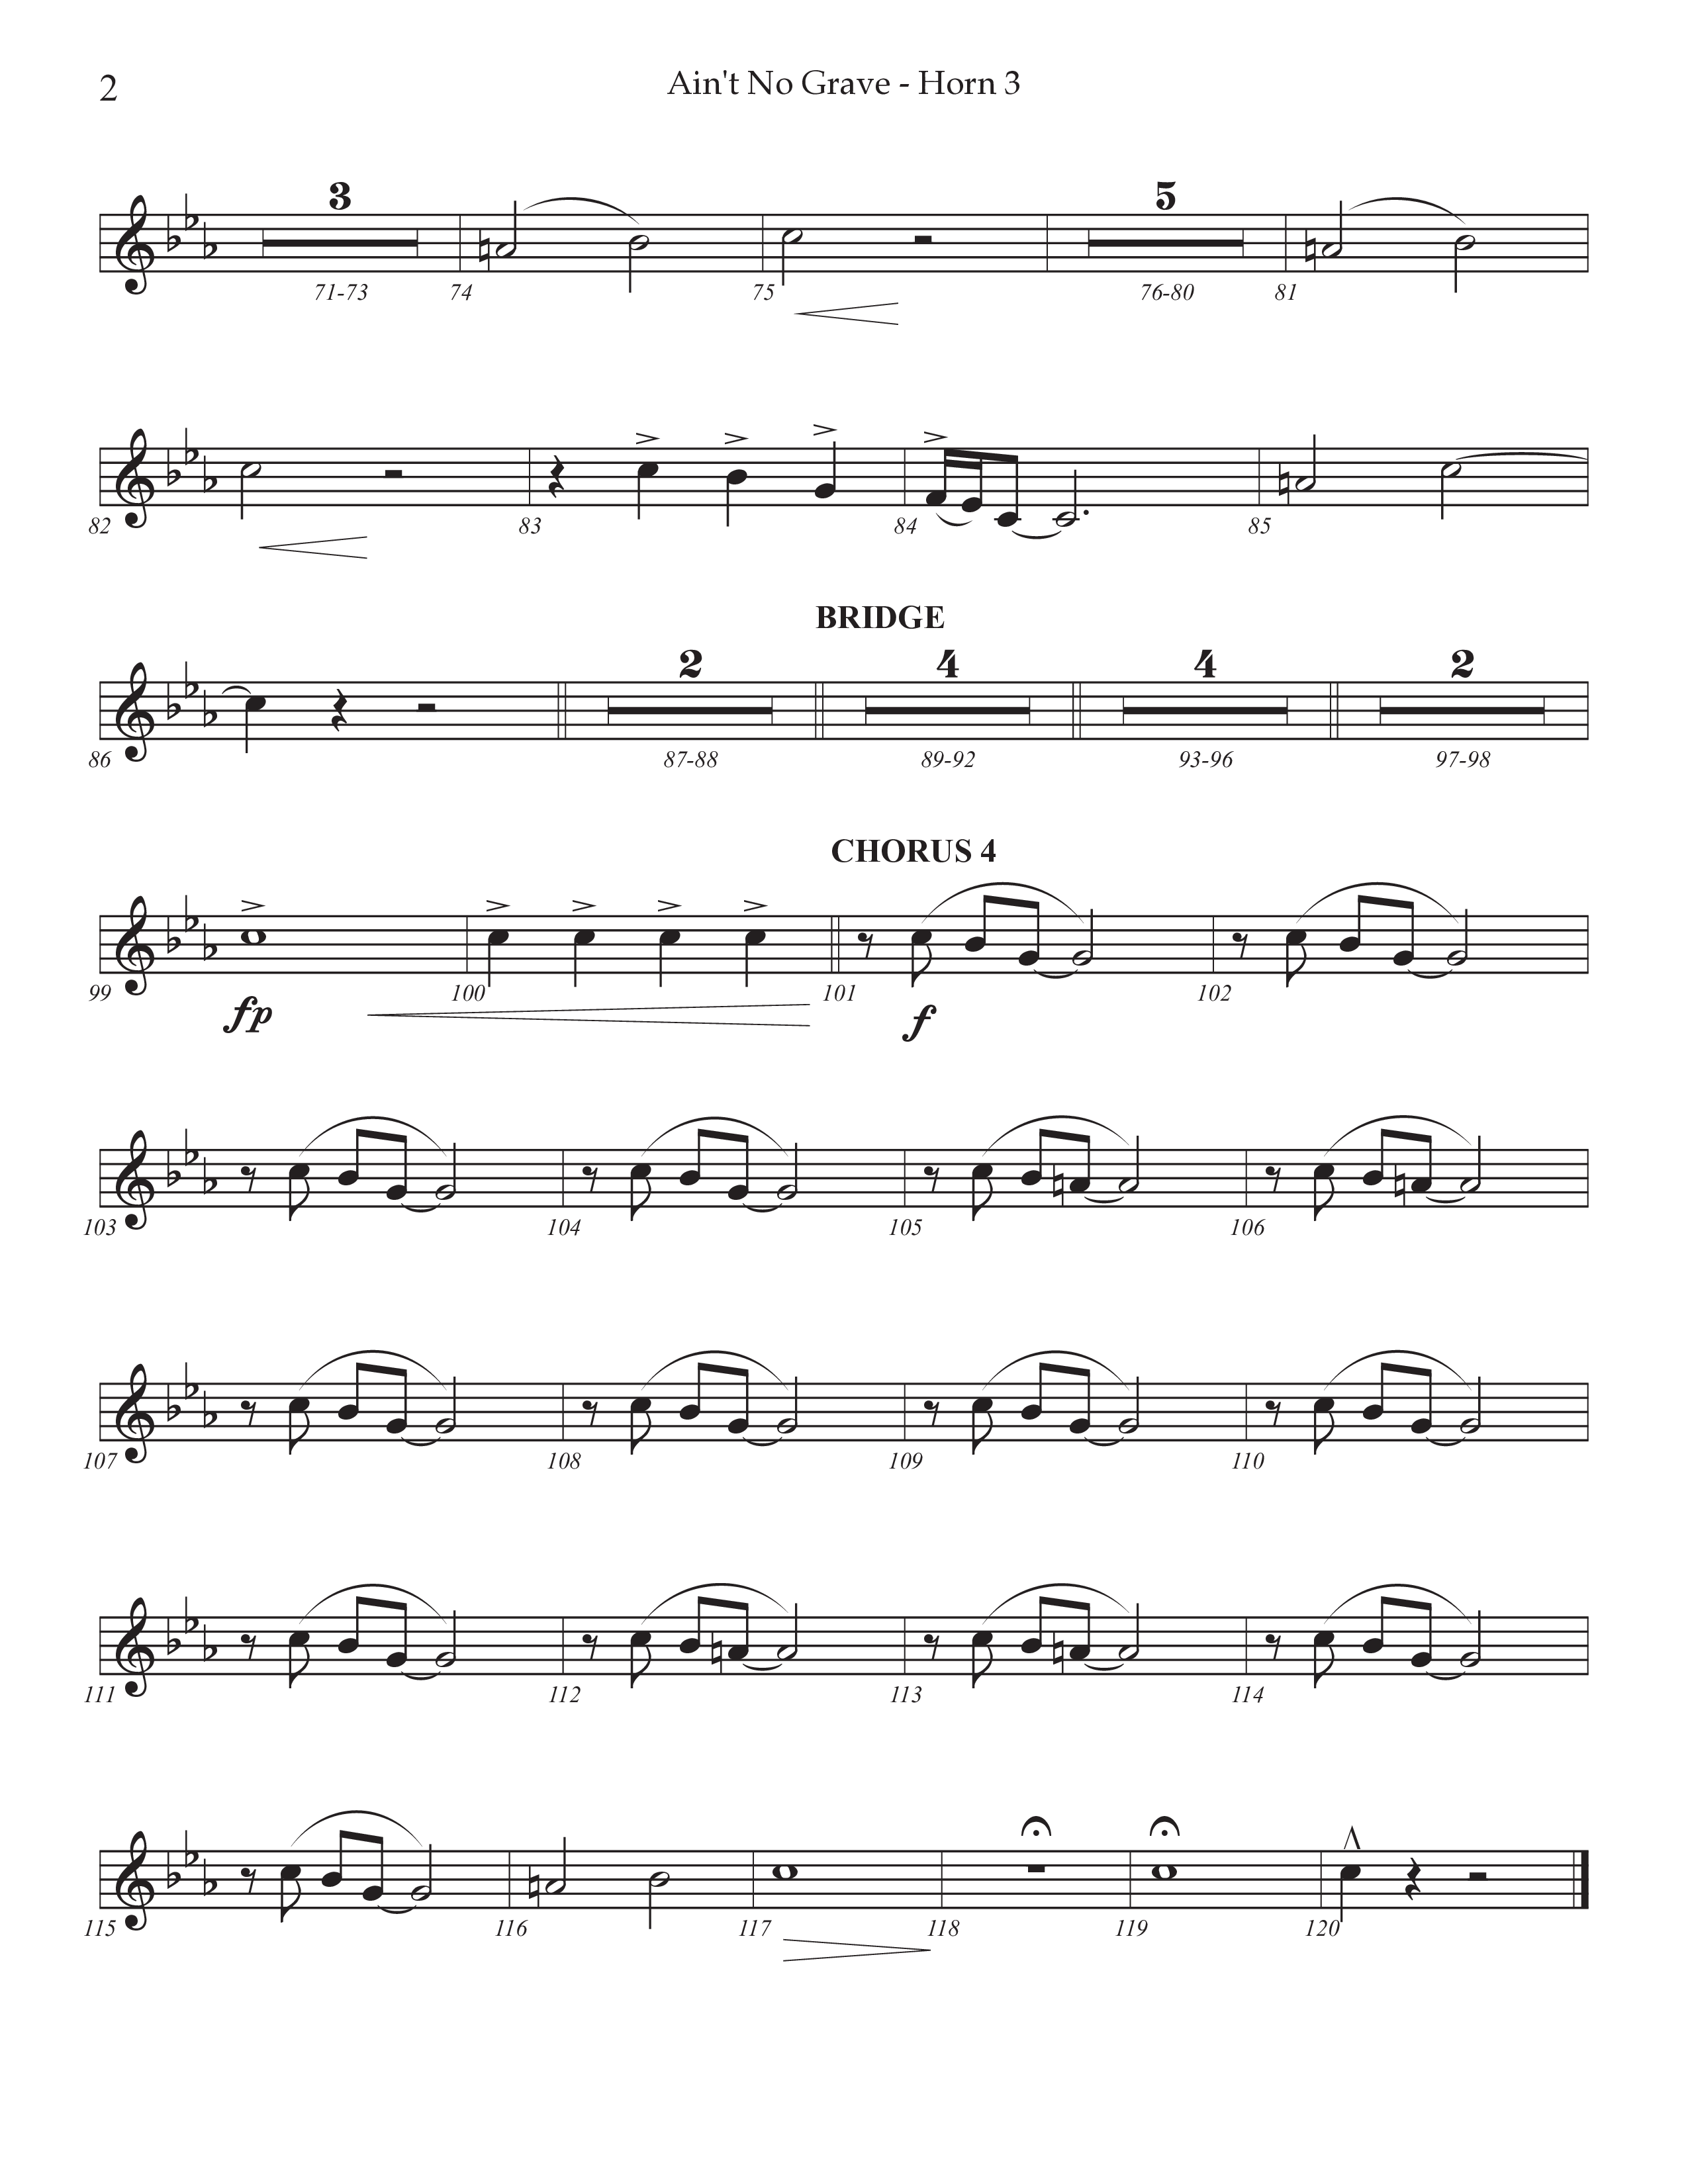 Ain't No Grave (Choral Anthem SATB) French Horn 3 (Prestonwood Choir / Prestonwood Worship / Arr. Jonathan Walker)